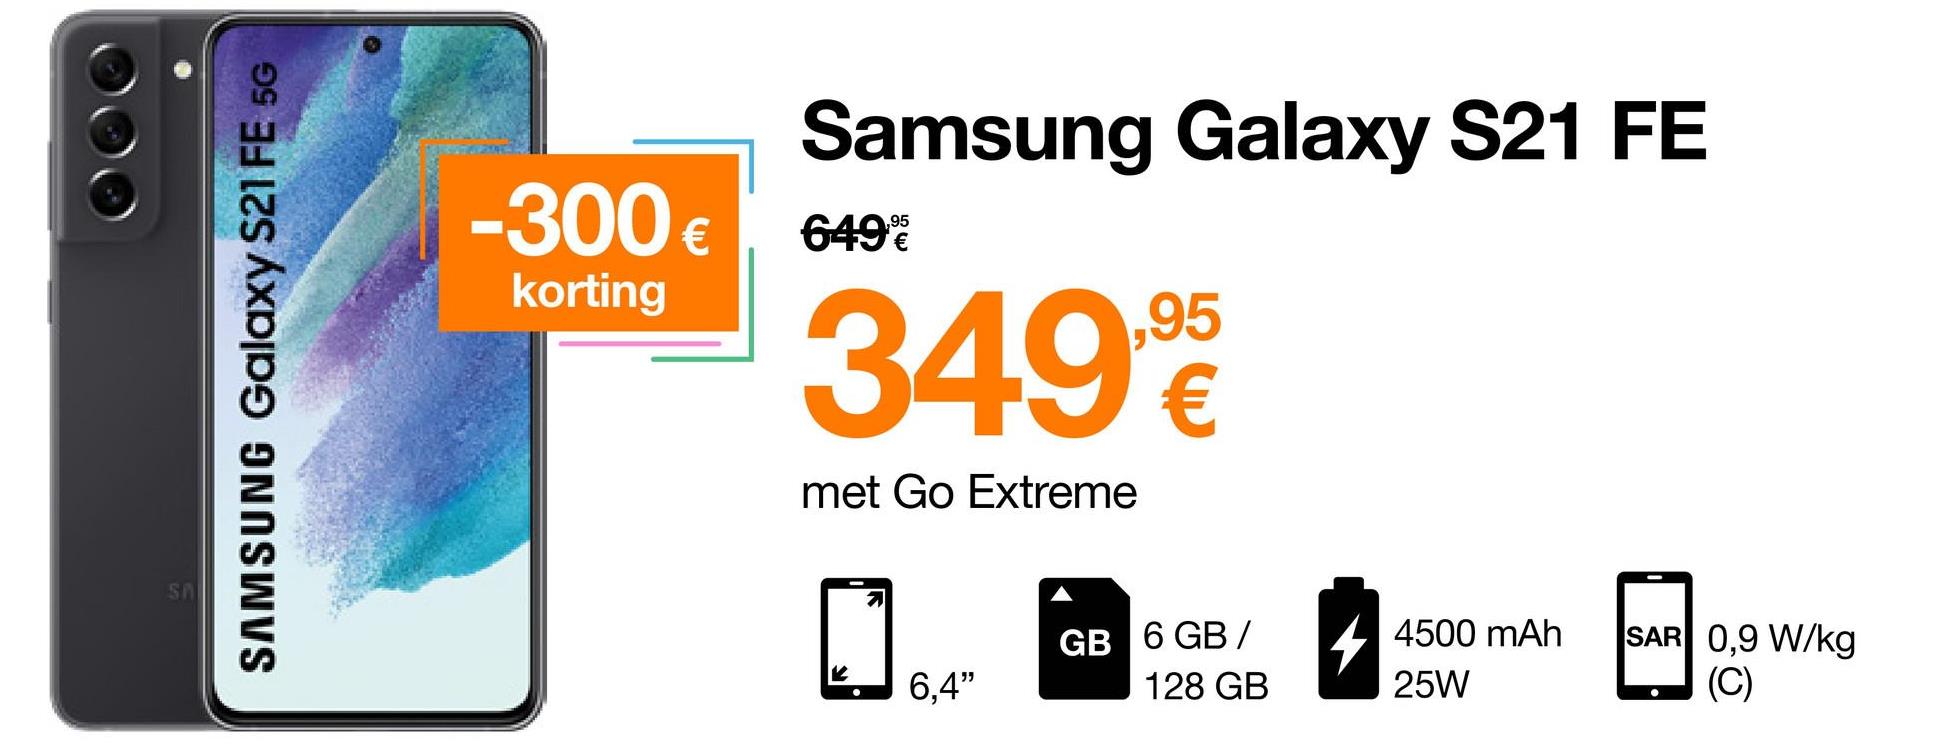 SA
SAMSUNG Galaxy S21 FE 5G
Samsung Galaxy S21 FE
349,9
met Go Extreme
21
1
4500 mAh
25W
-300€ 649€
korting
6,4"
GB 6 GB/
128 GB
SAR 0,9 W/kg
(C)